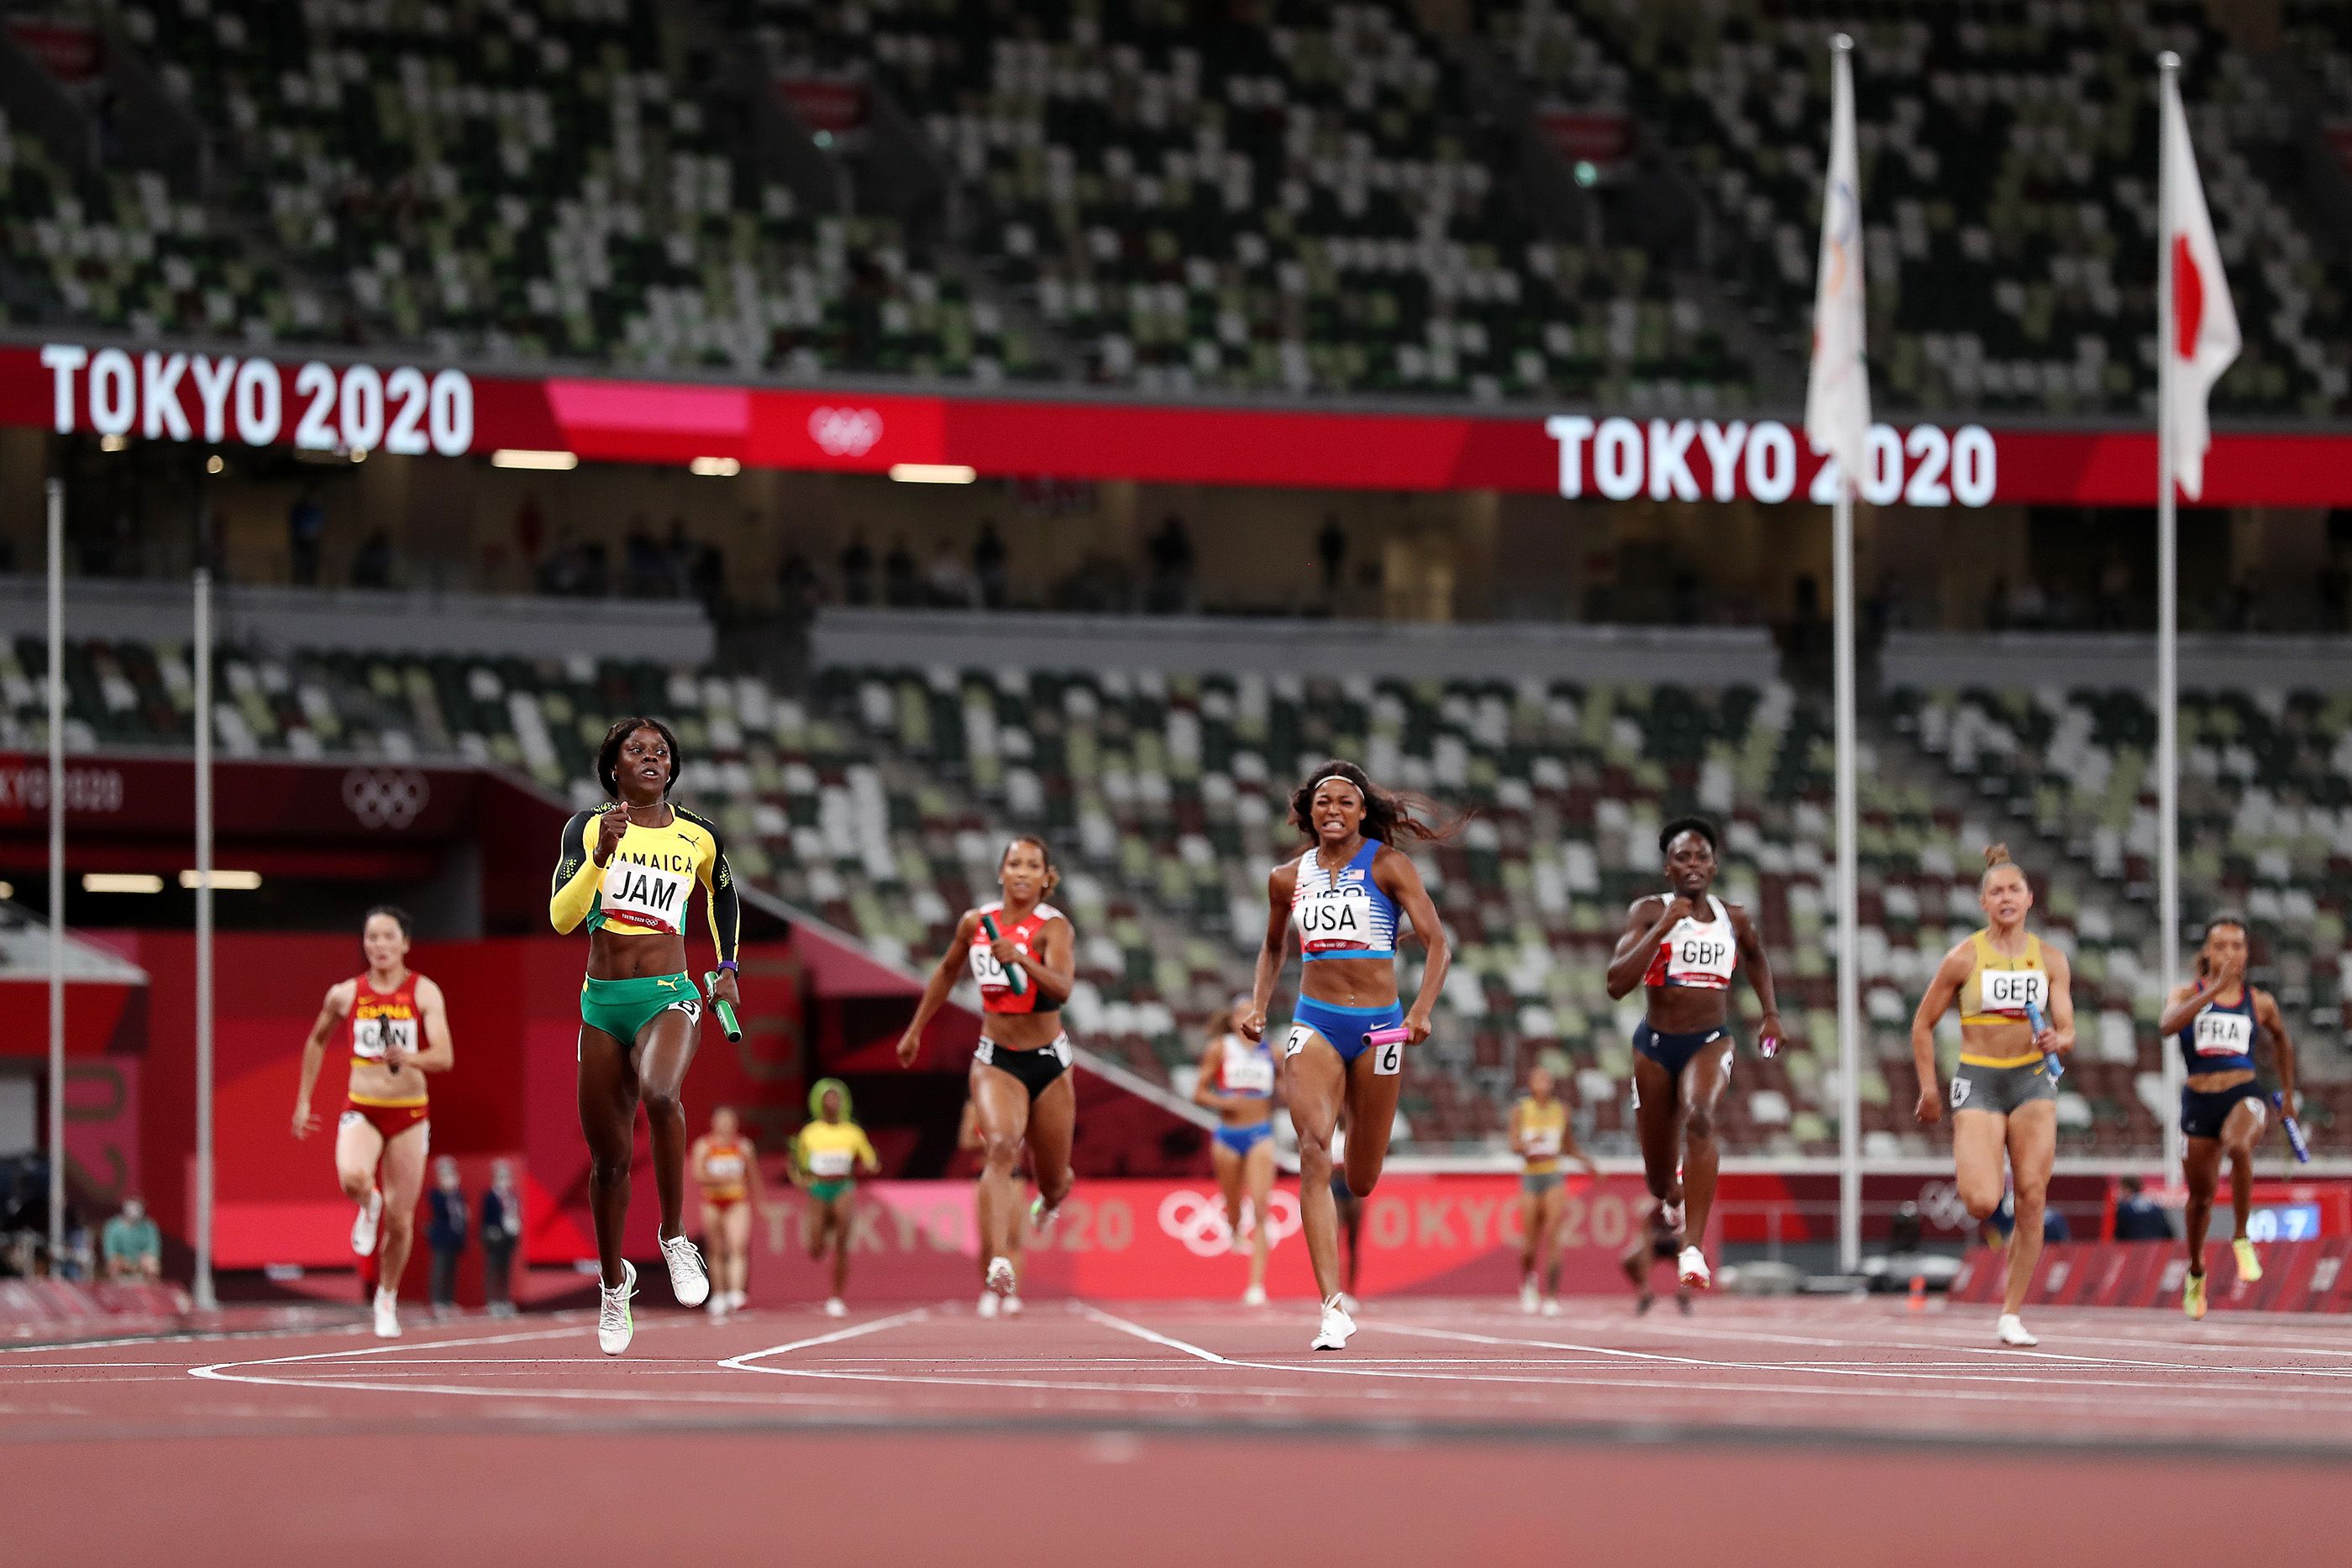 The women's 4x100m final in Tokyo